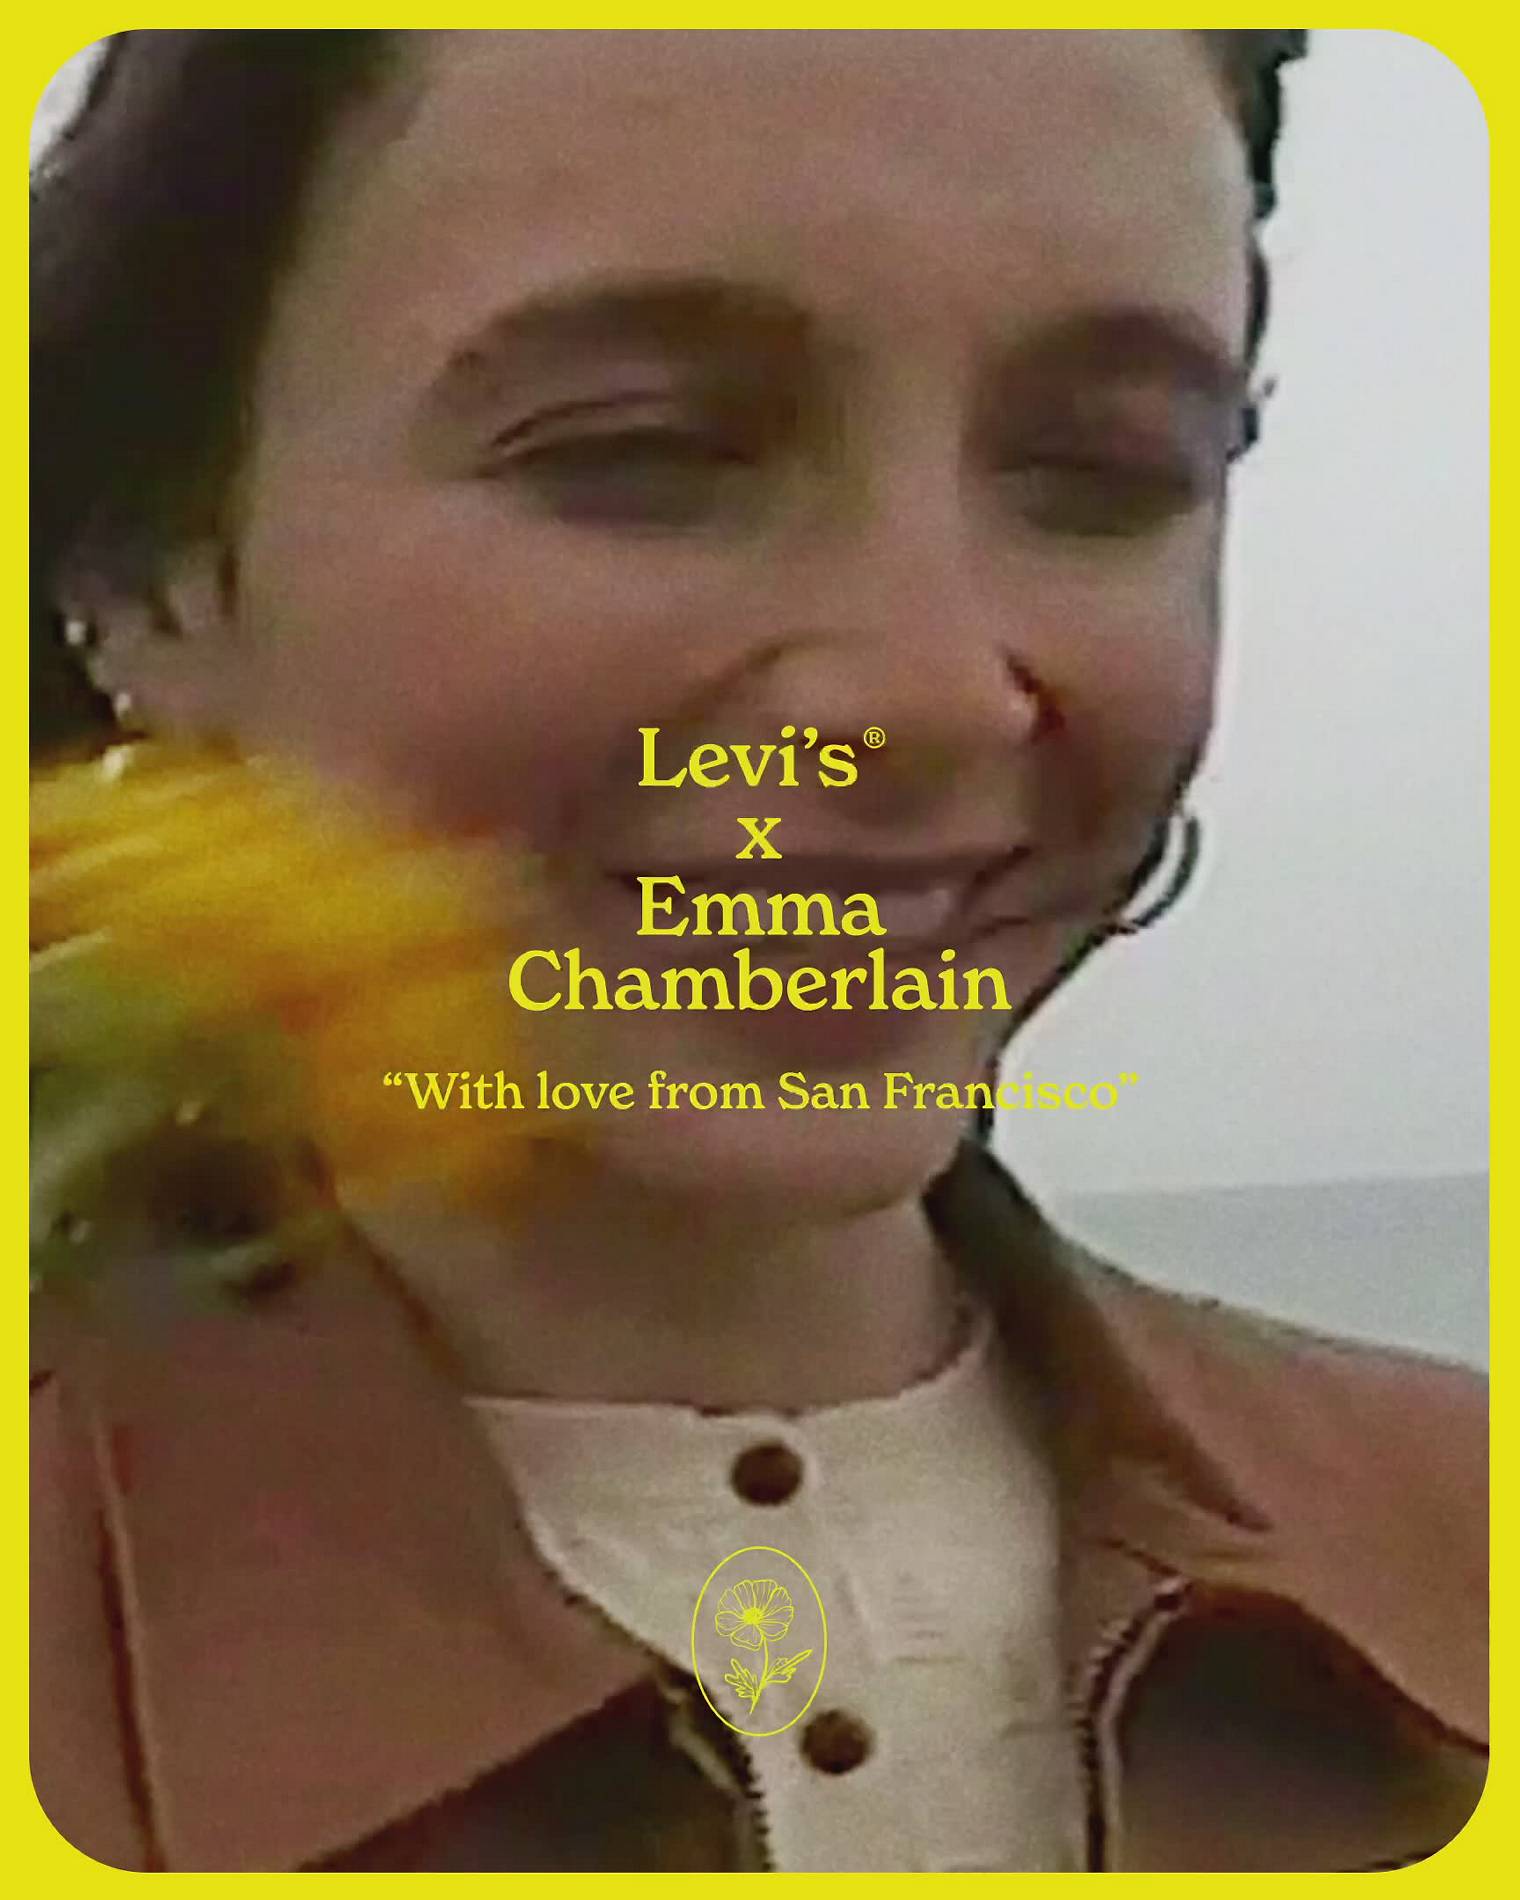 Photo of Emma Chamberlain posing in Levi's® x Emma Chamberlain clothing against a desert backdrop